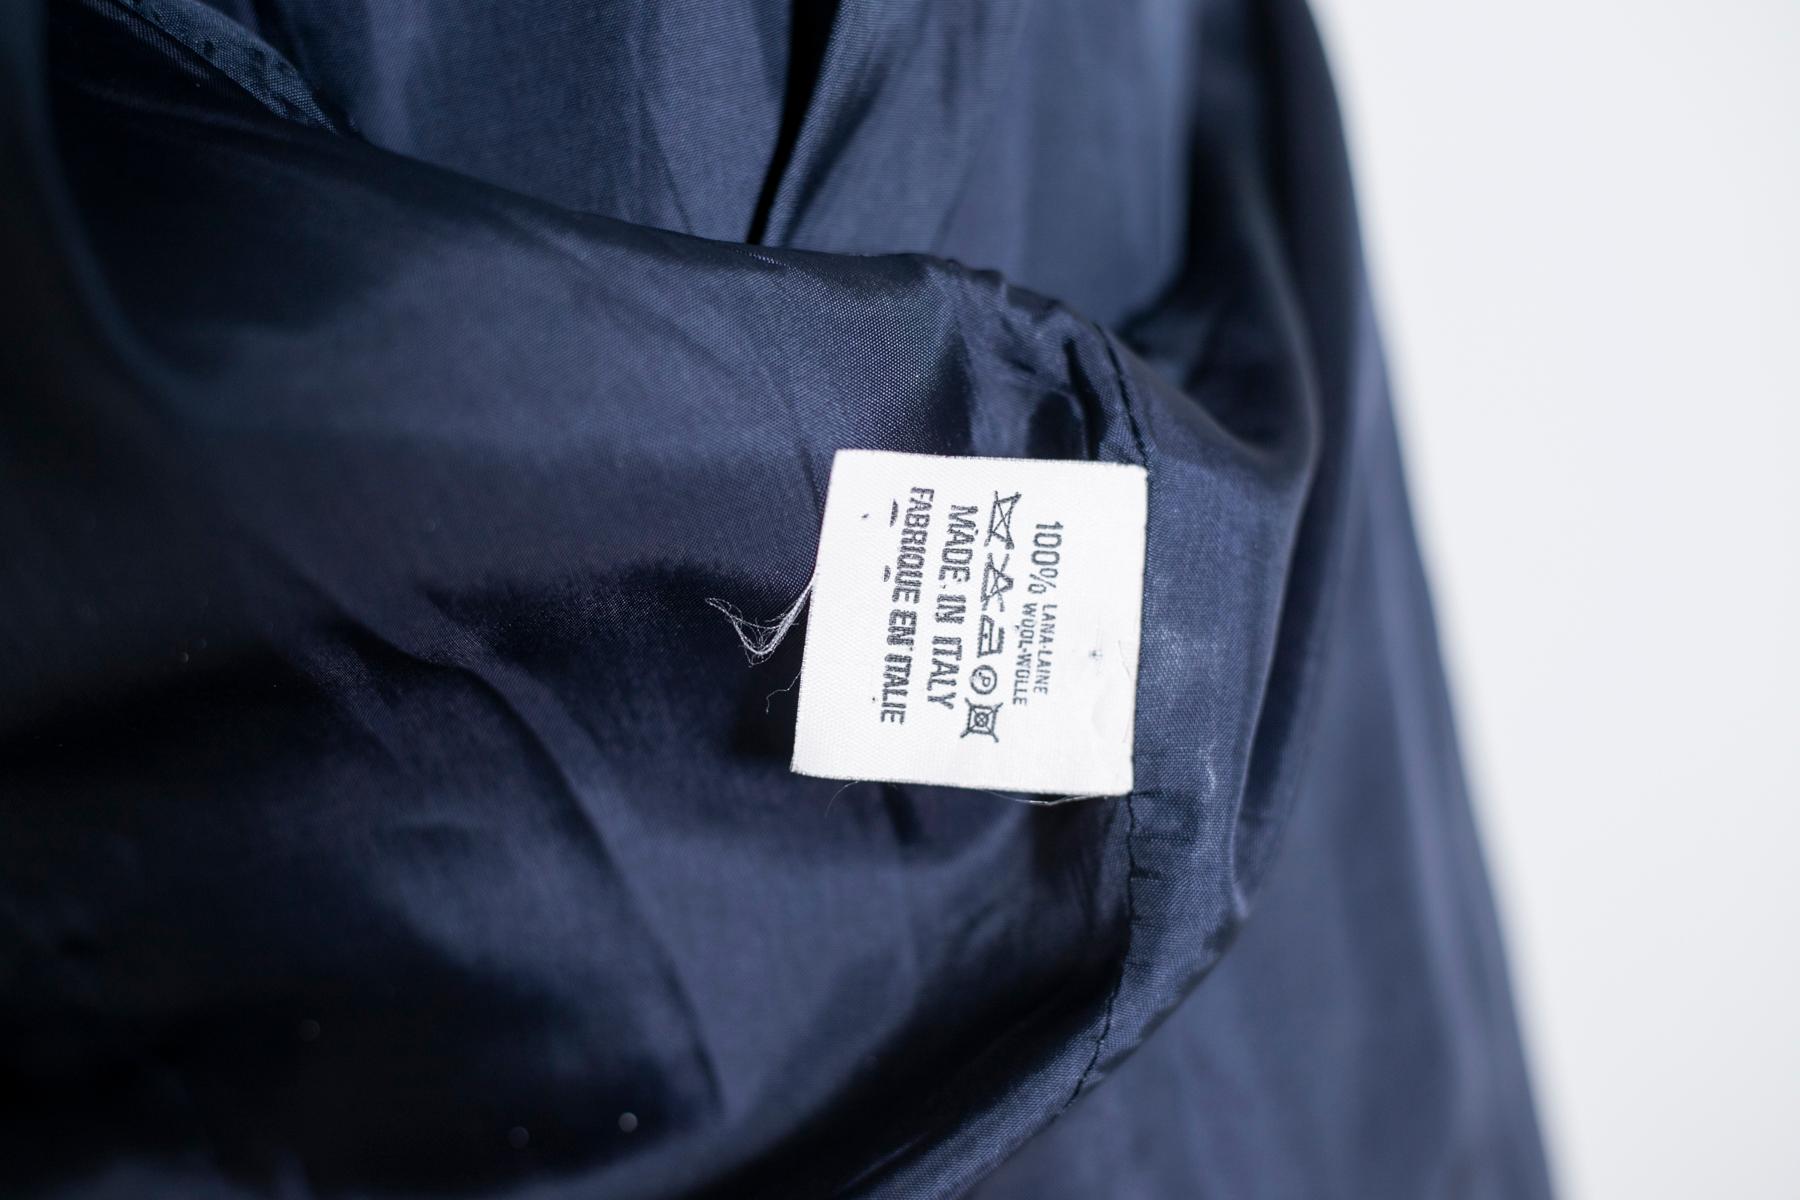 Black Rocco Barocco Jeans Women's Blue Navy Short Jacket, Oversized Fit For Sale